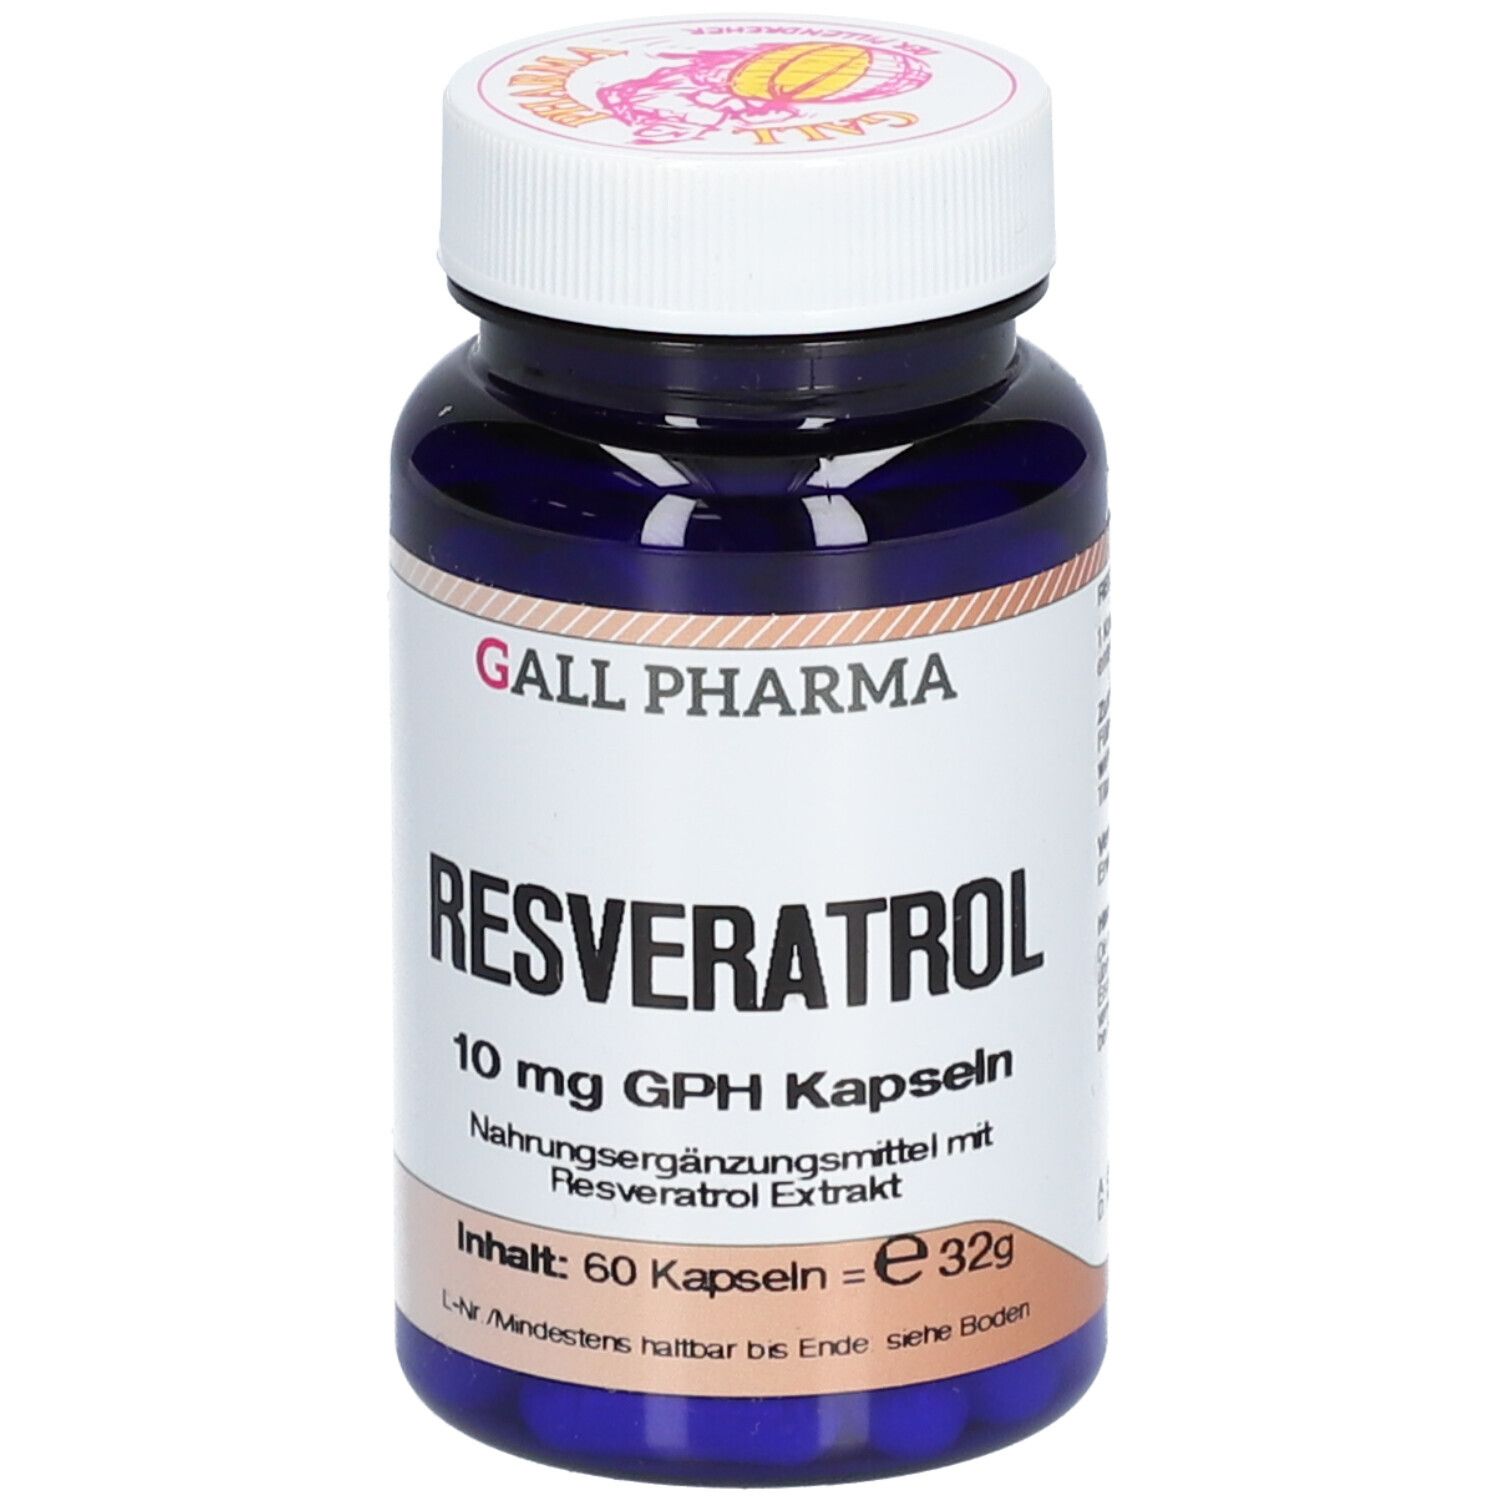 Gall Pharma Resveratrol 10 mg GPH Kapseln